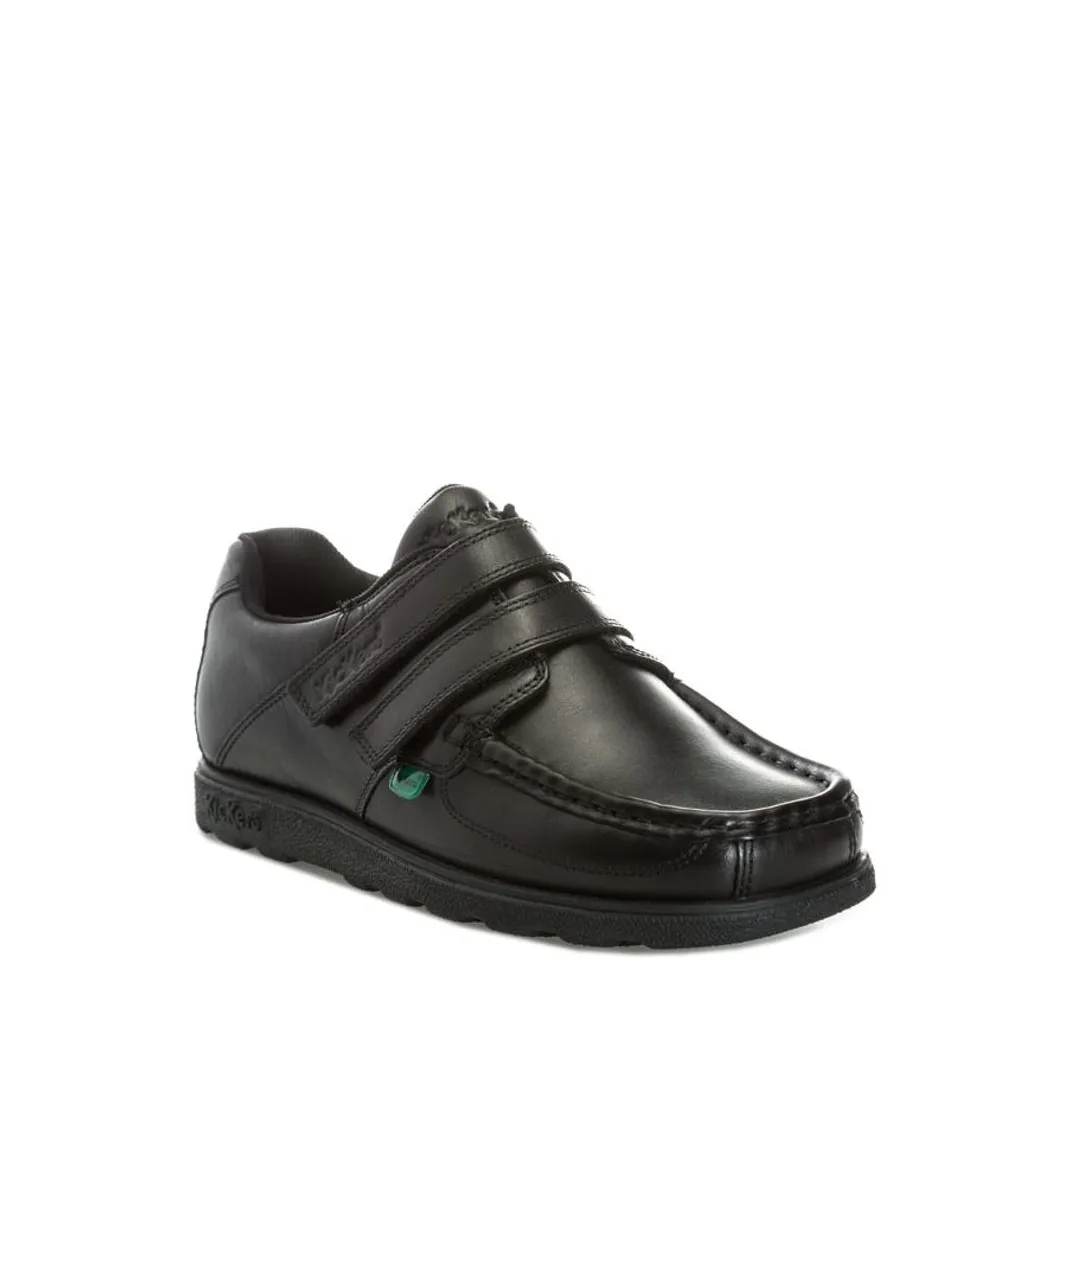 Kickers Boys Boy's Junior Fragma Strap Shoe in Black Leather